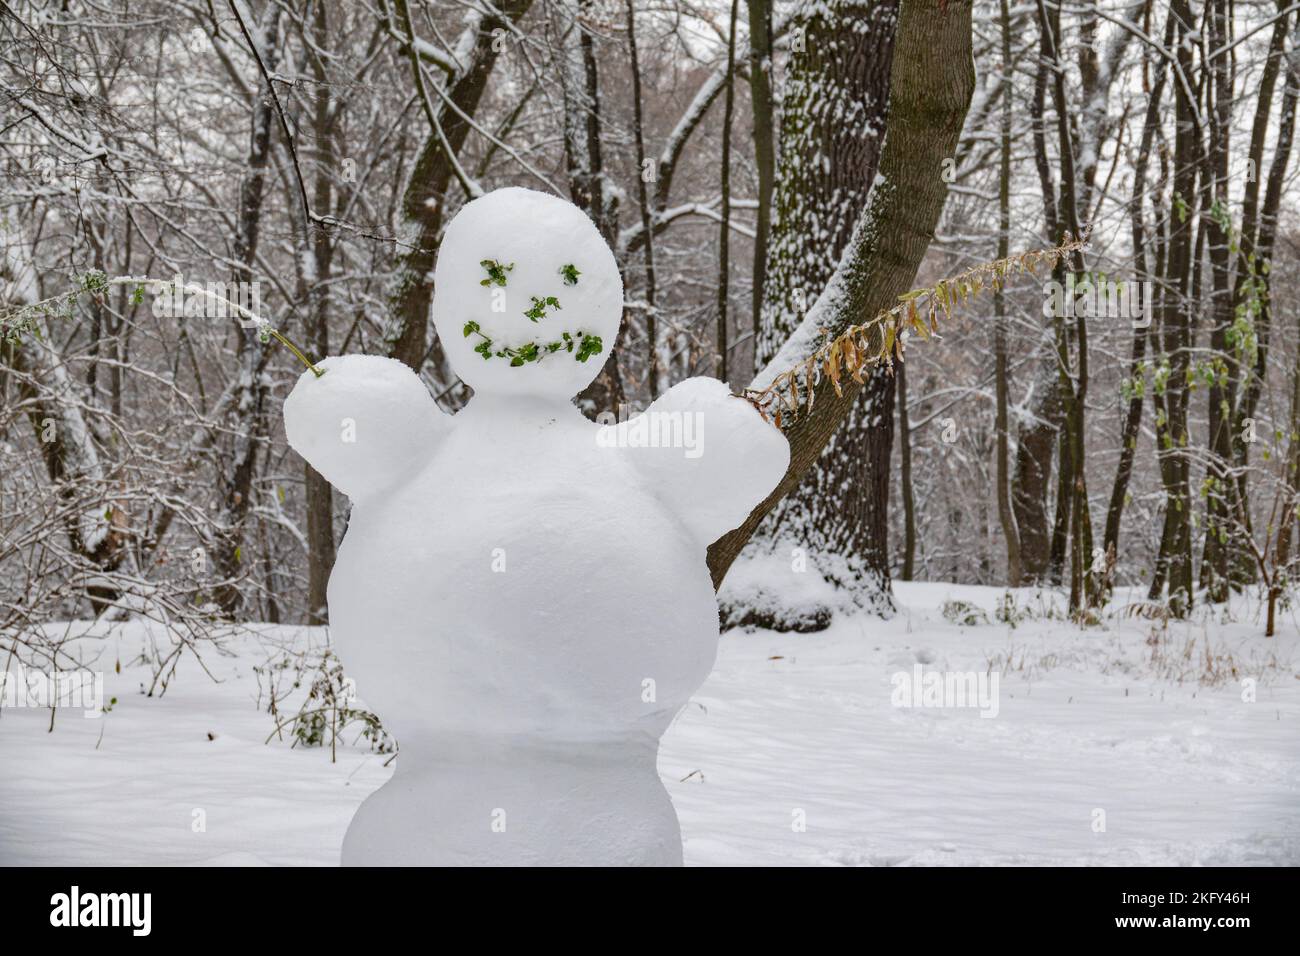 Funny snowman in the winter park. Symbol of winter season Stock Photo